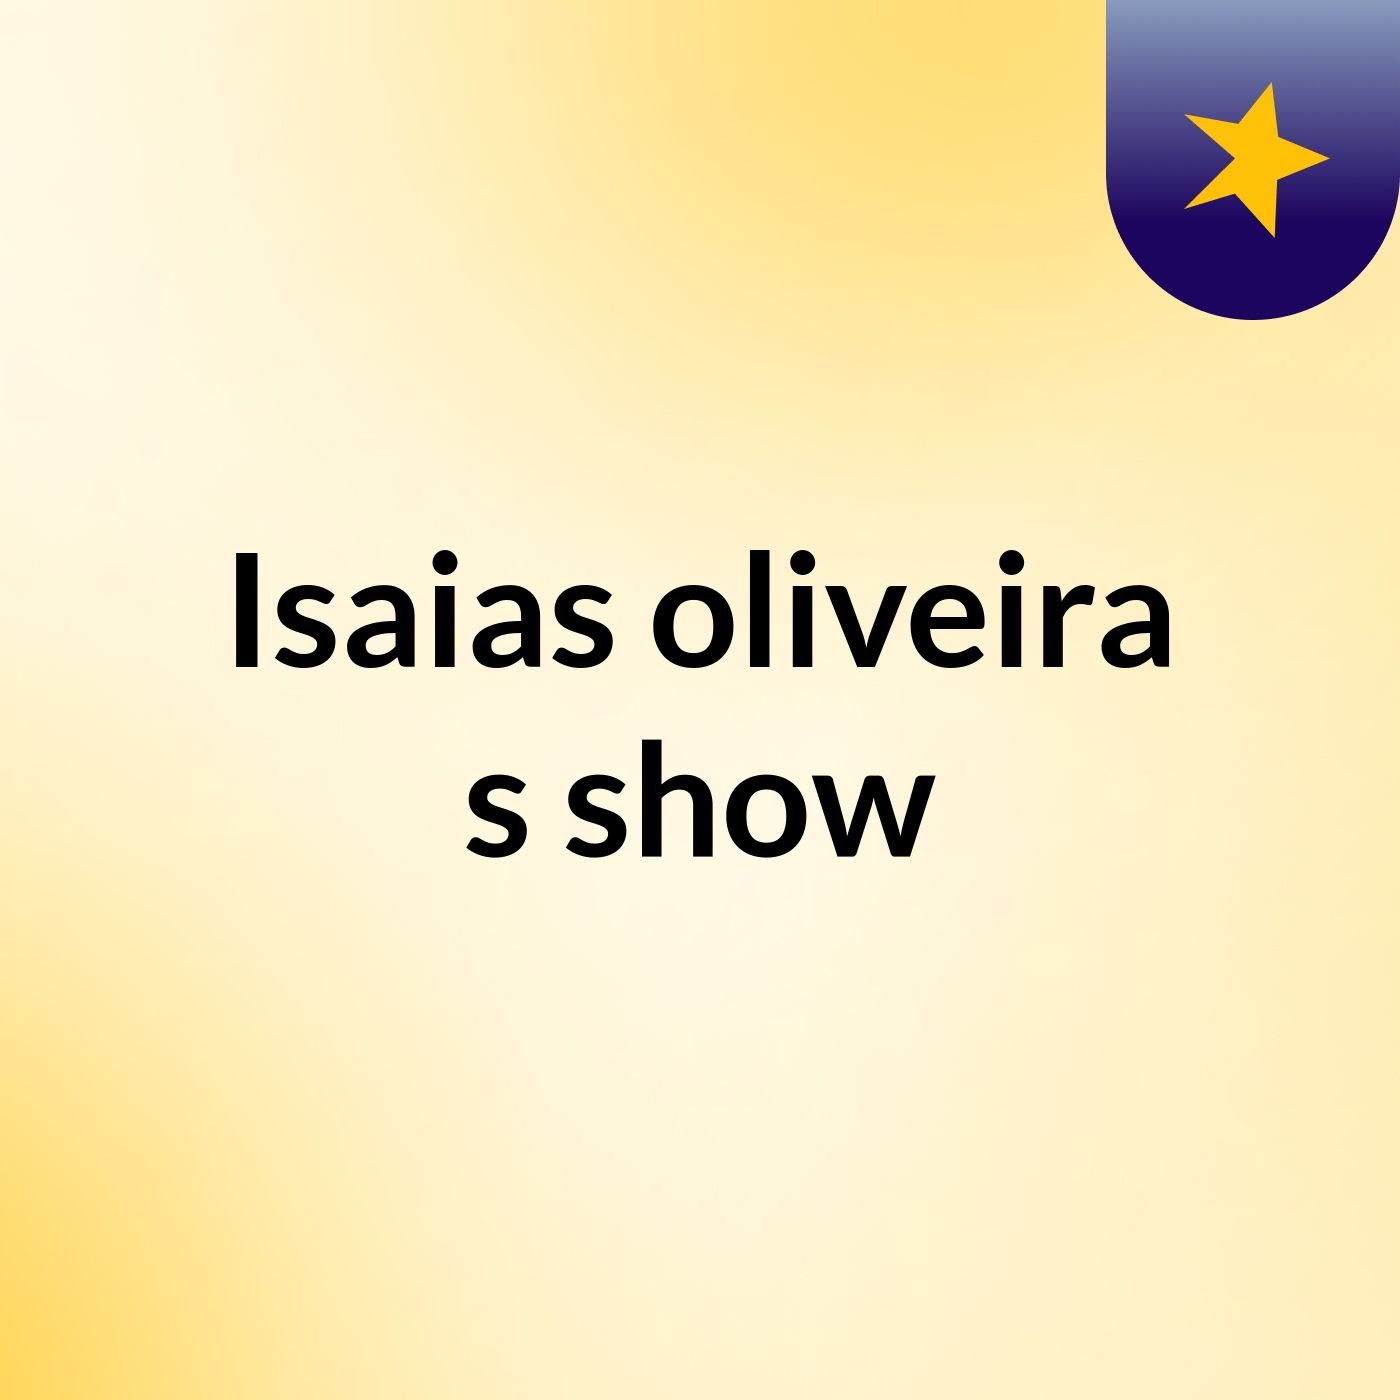 Isaias oliveira's show